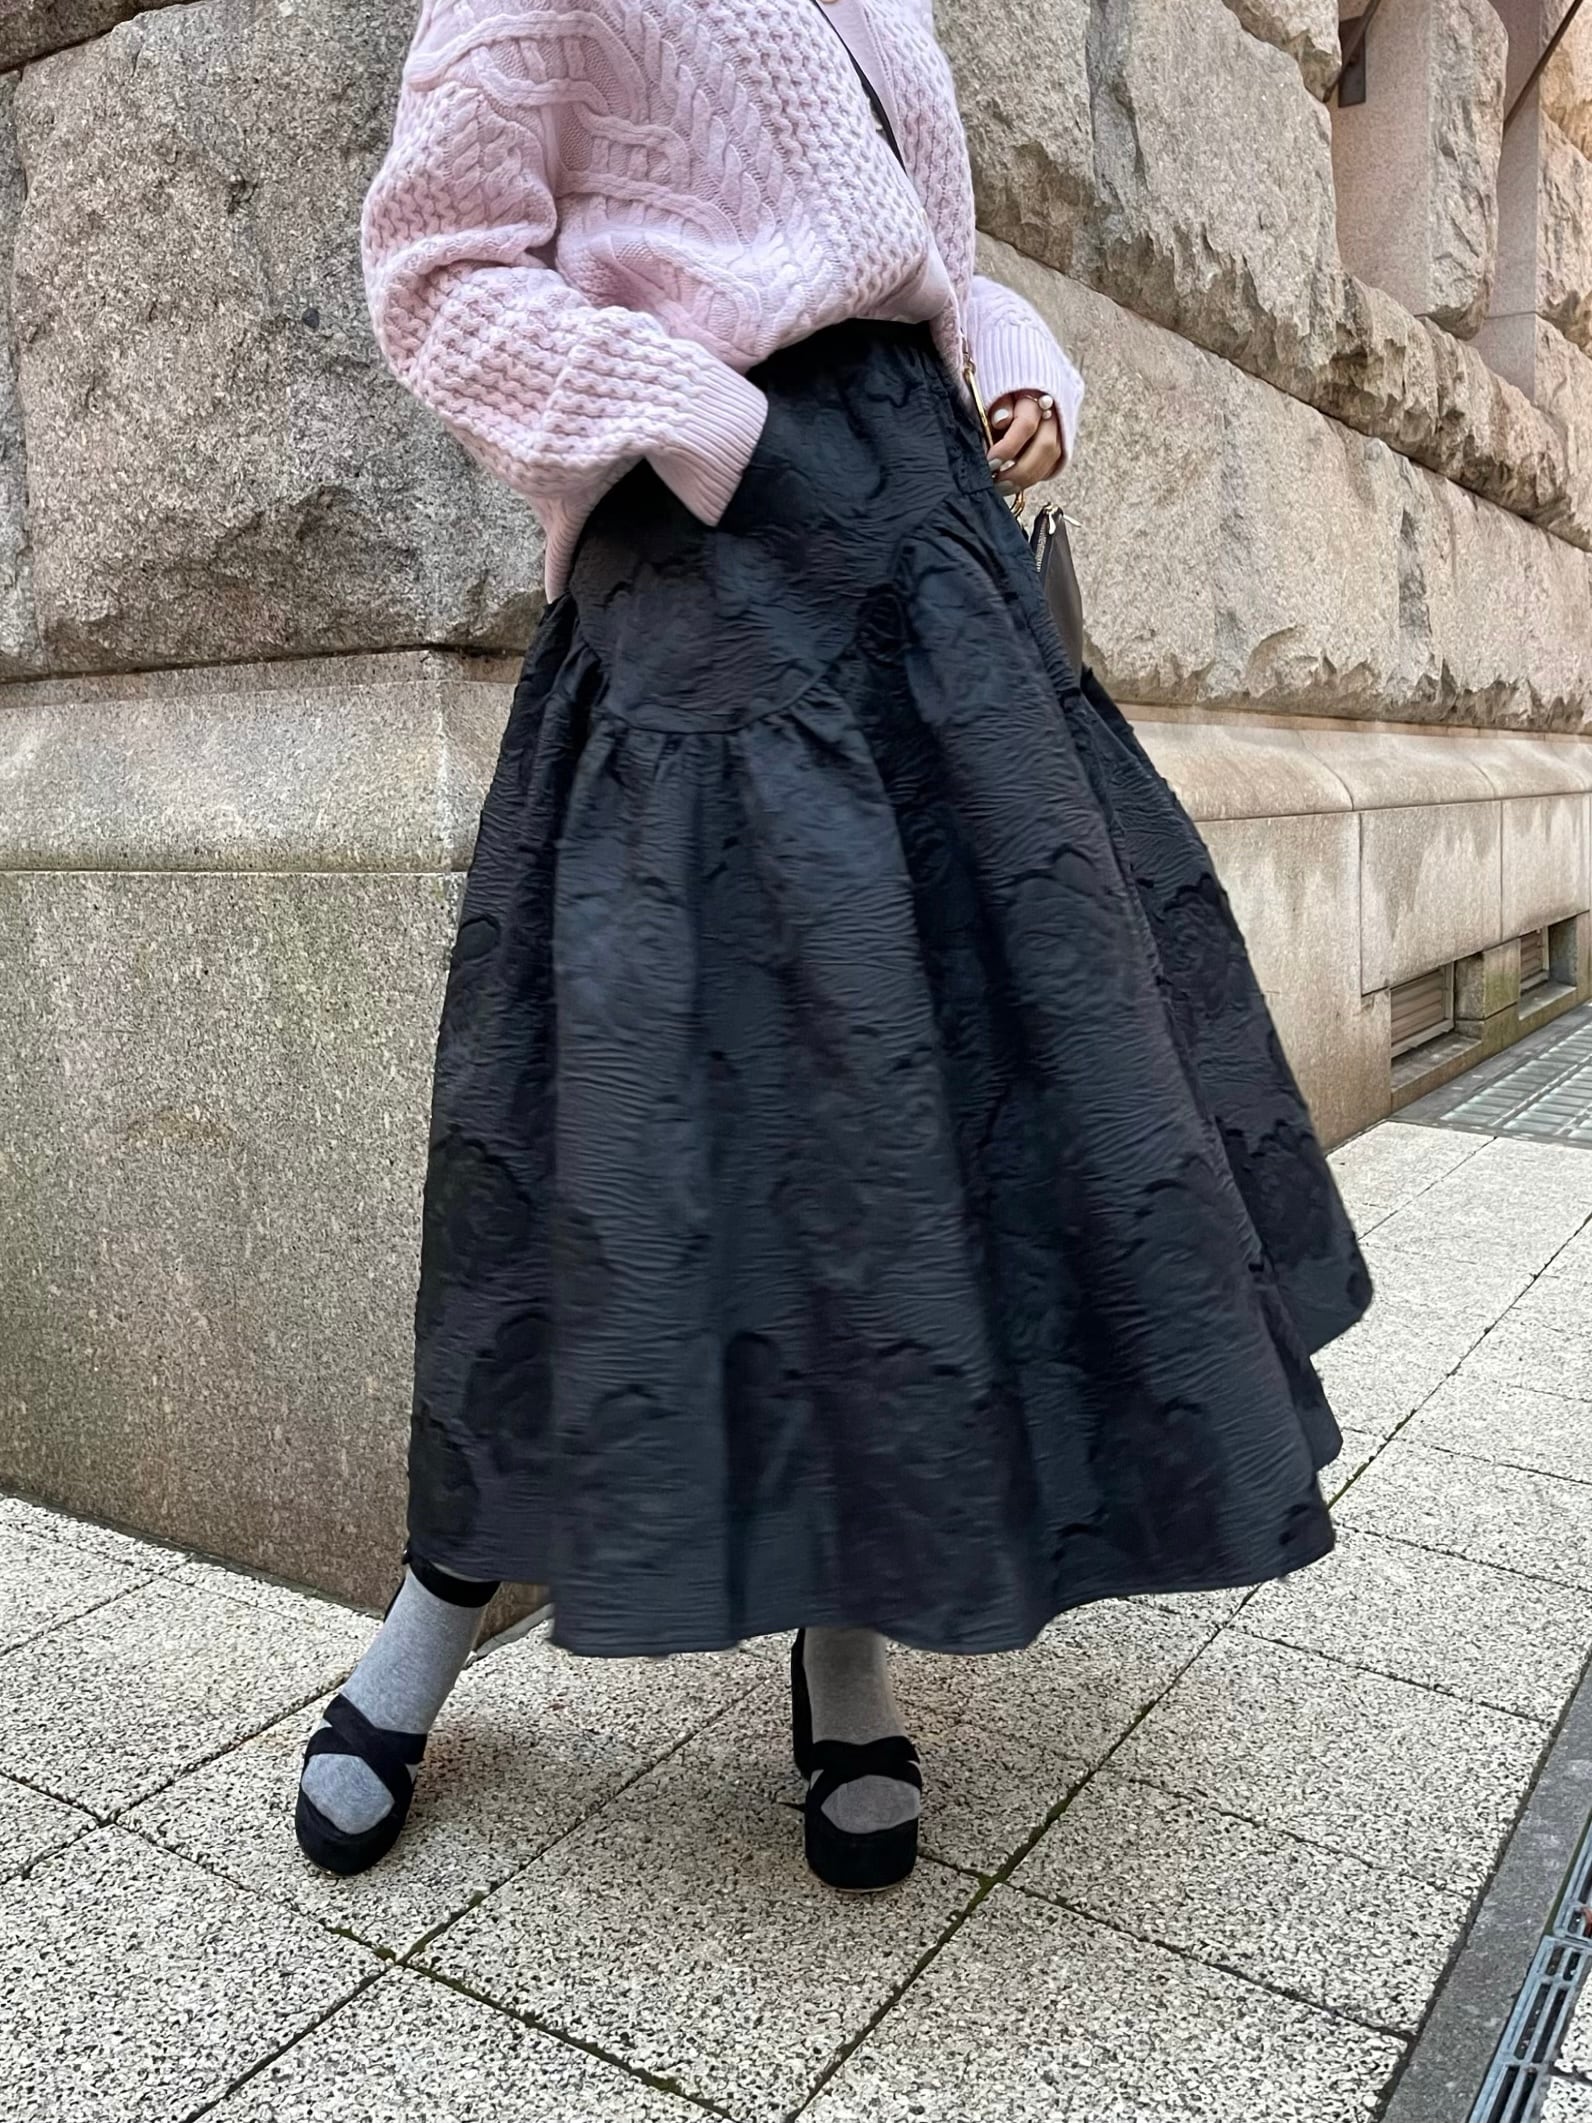 HYEONヘヨン jacquard skirt / black